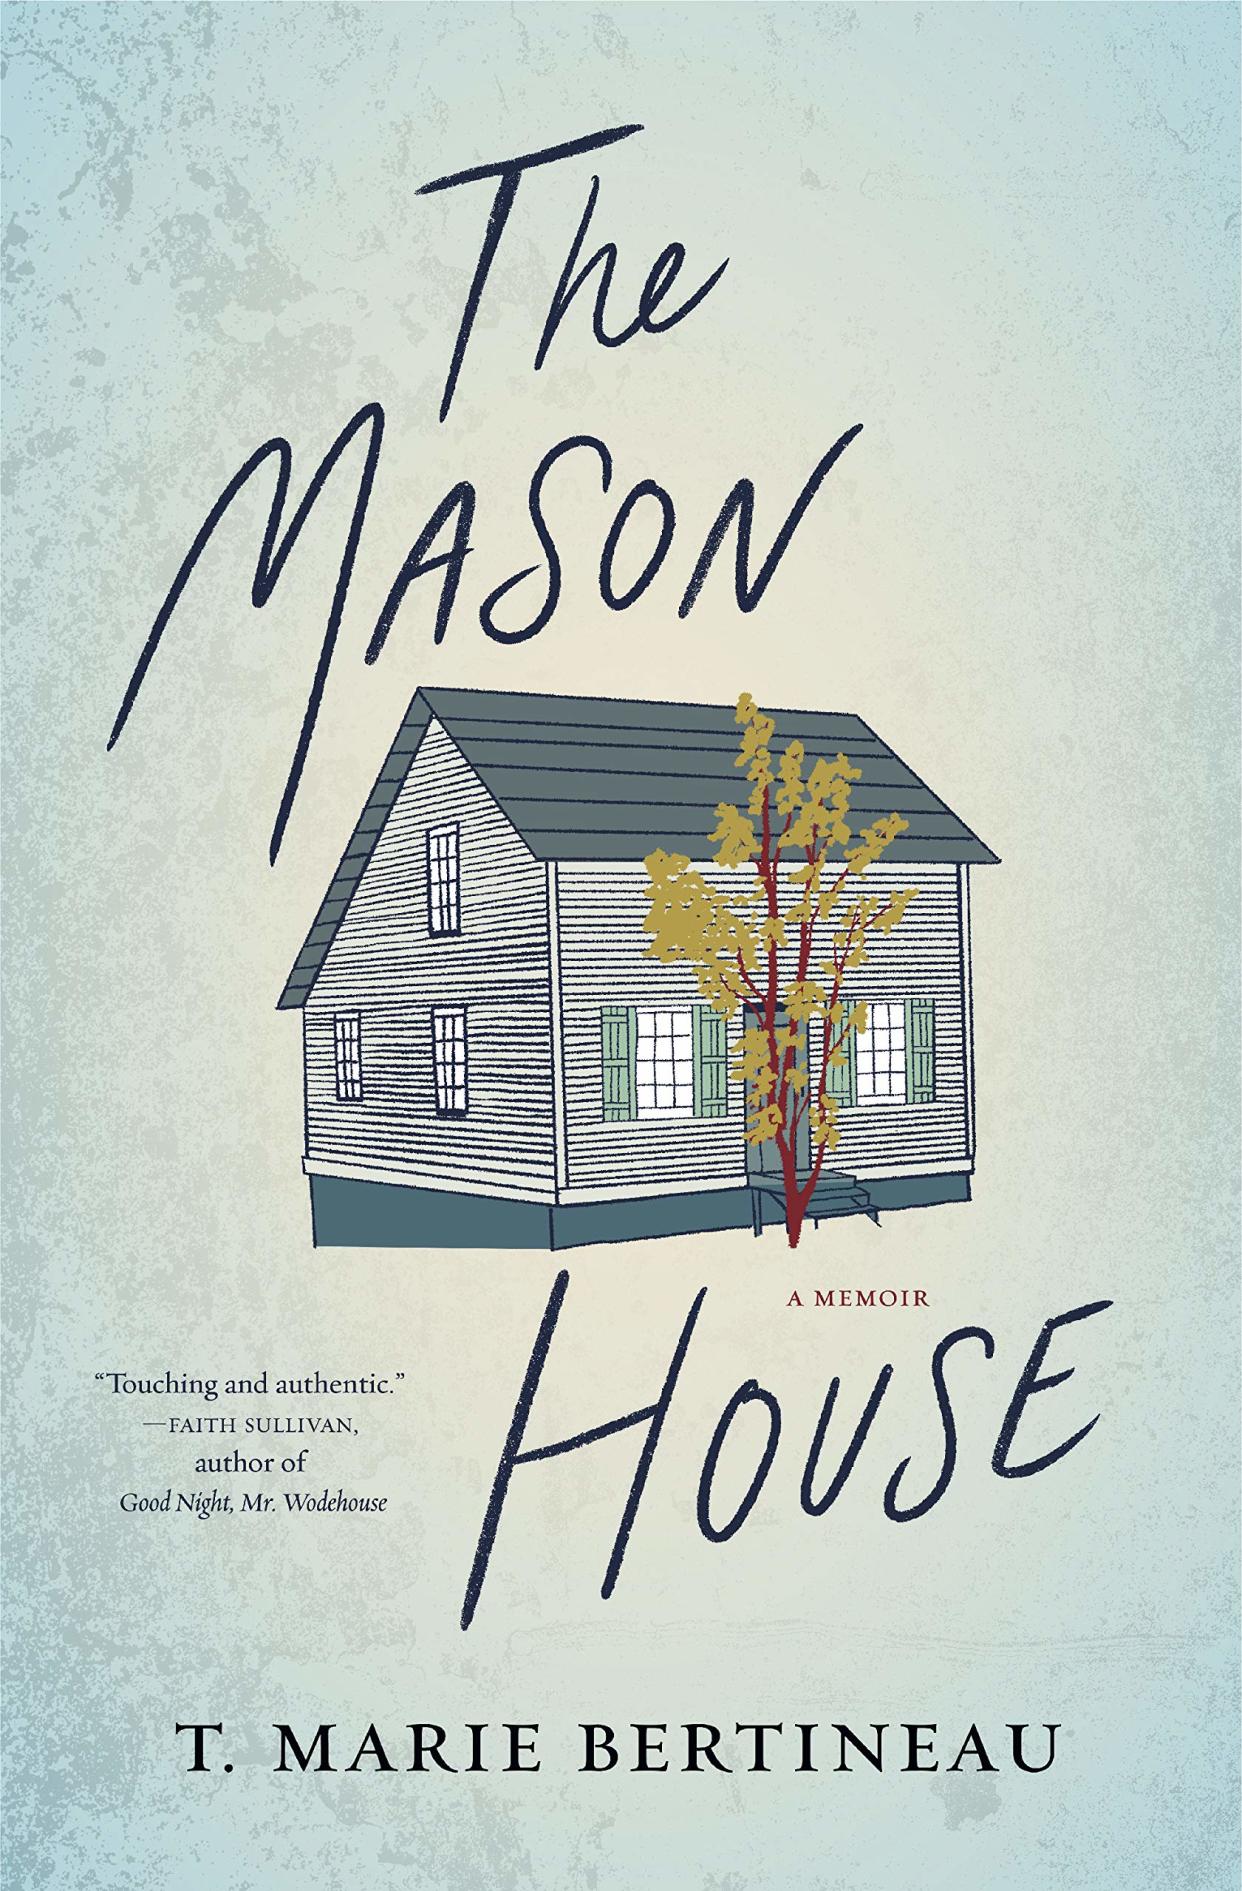 "The Mason House" by T. Marie Bertineau